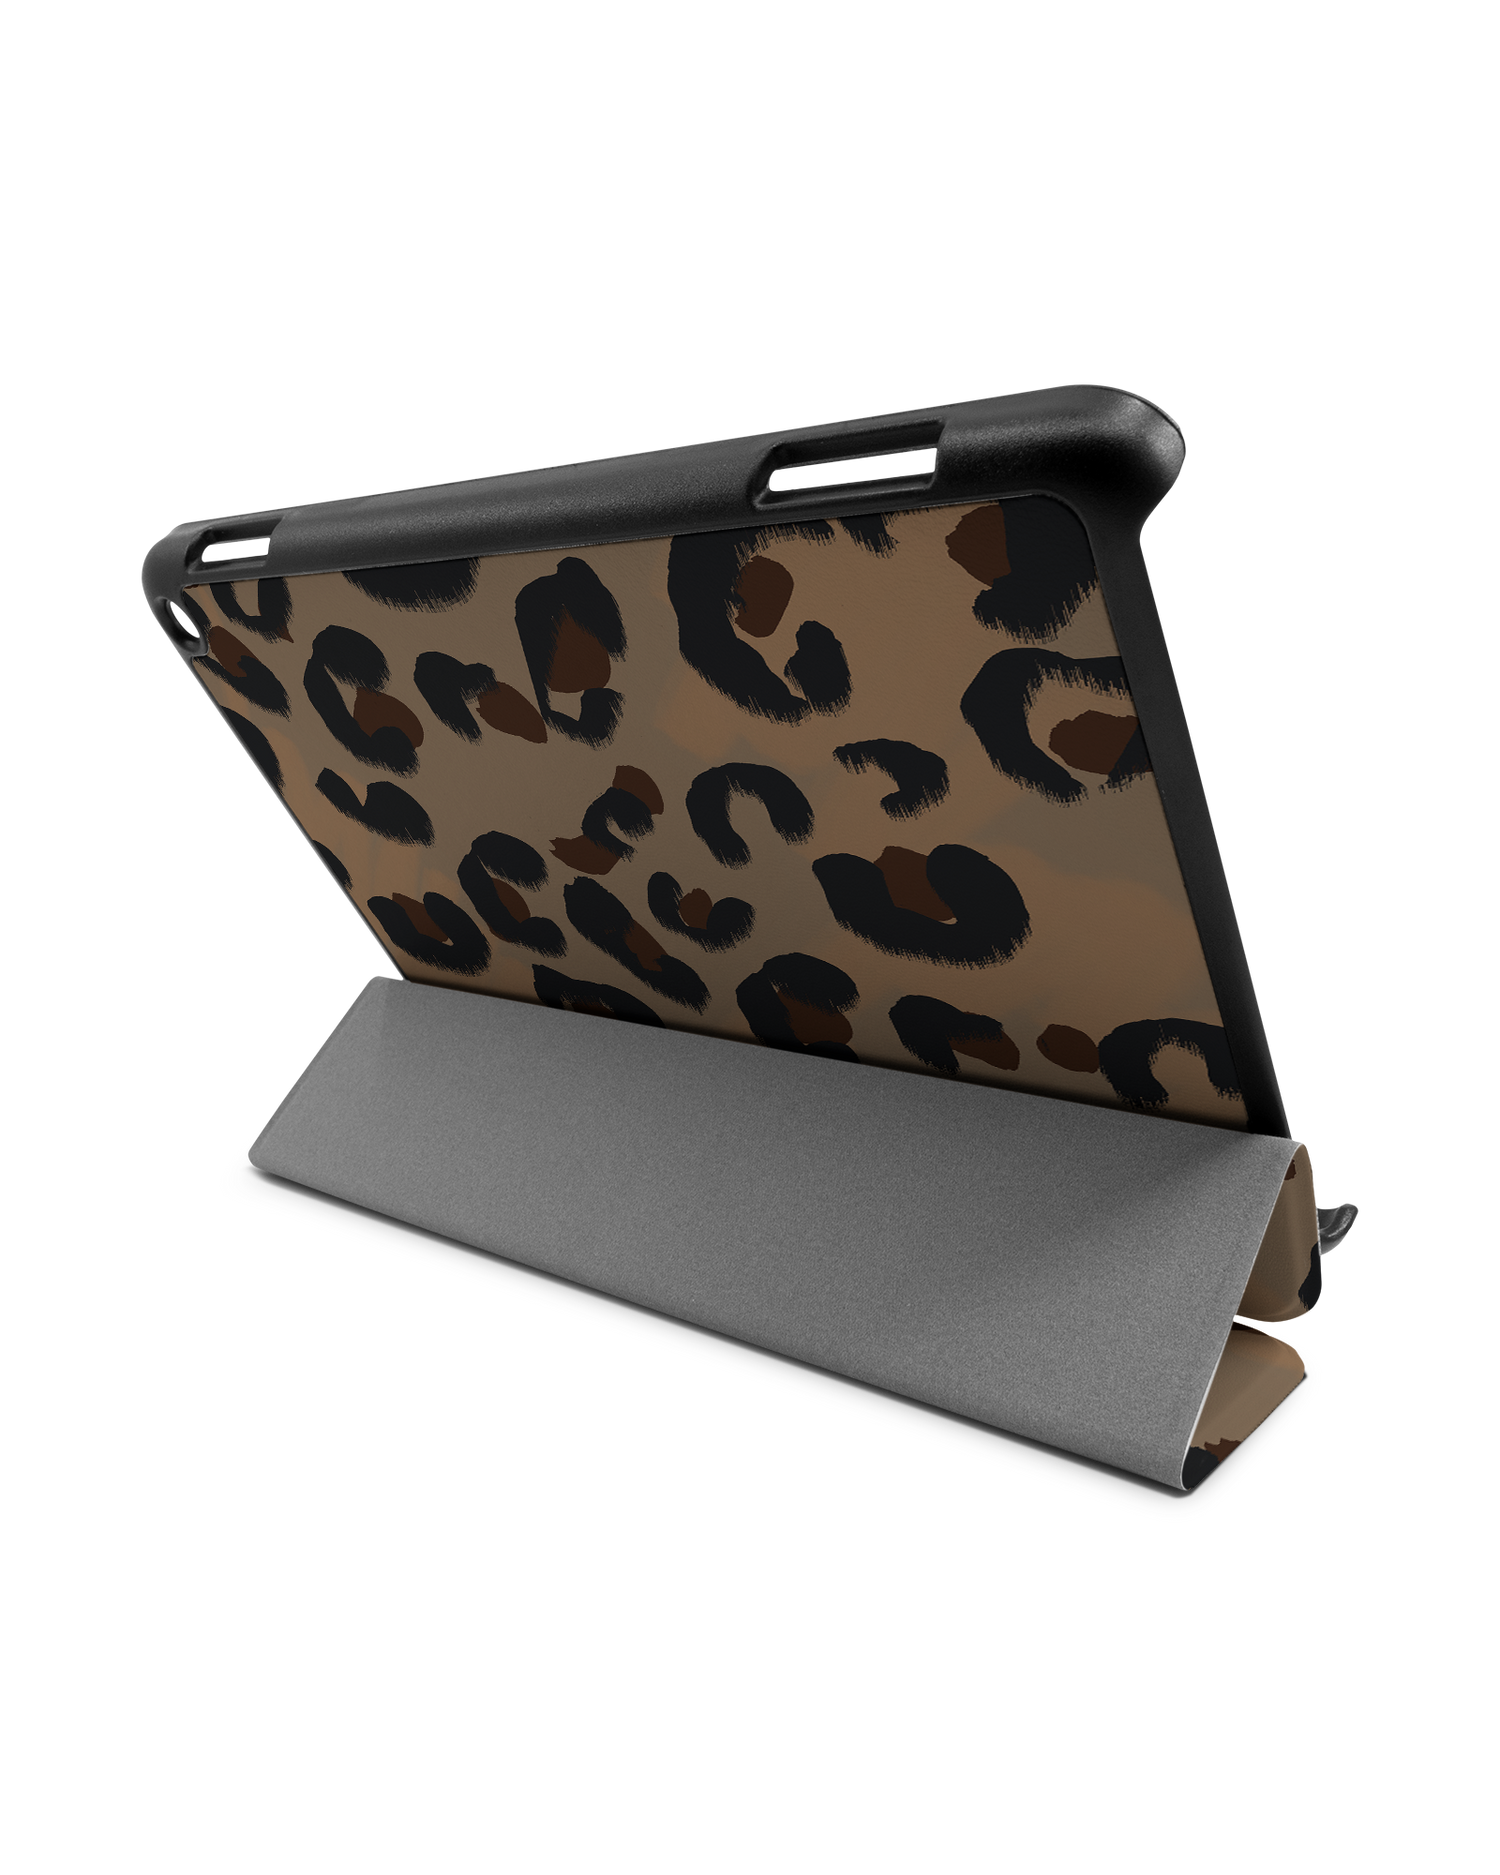 Leopard Repeat Tablet Smart Case für Amazon Fire HD 8 (2022), Amazon Fire HD 8 Plus (2022), Amazon Fire HD 8 (2020), Amazon Fire HD 8 Plus (2020): Aufgestellt im Querformat